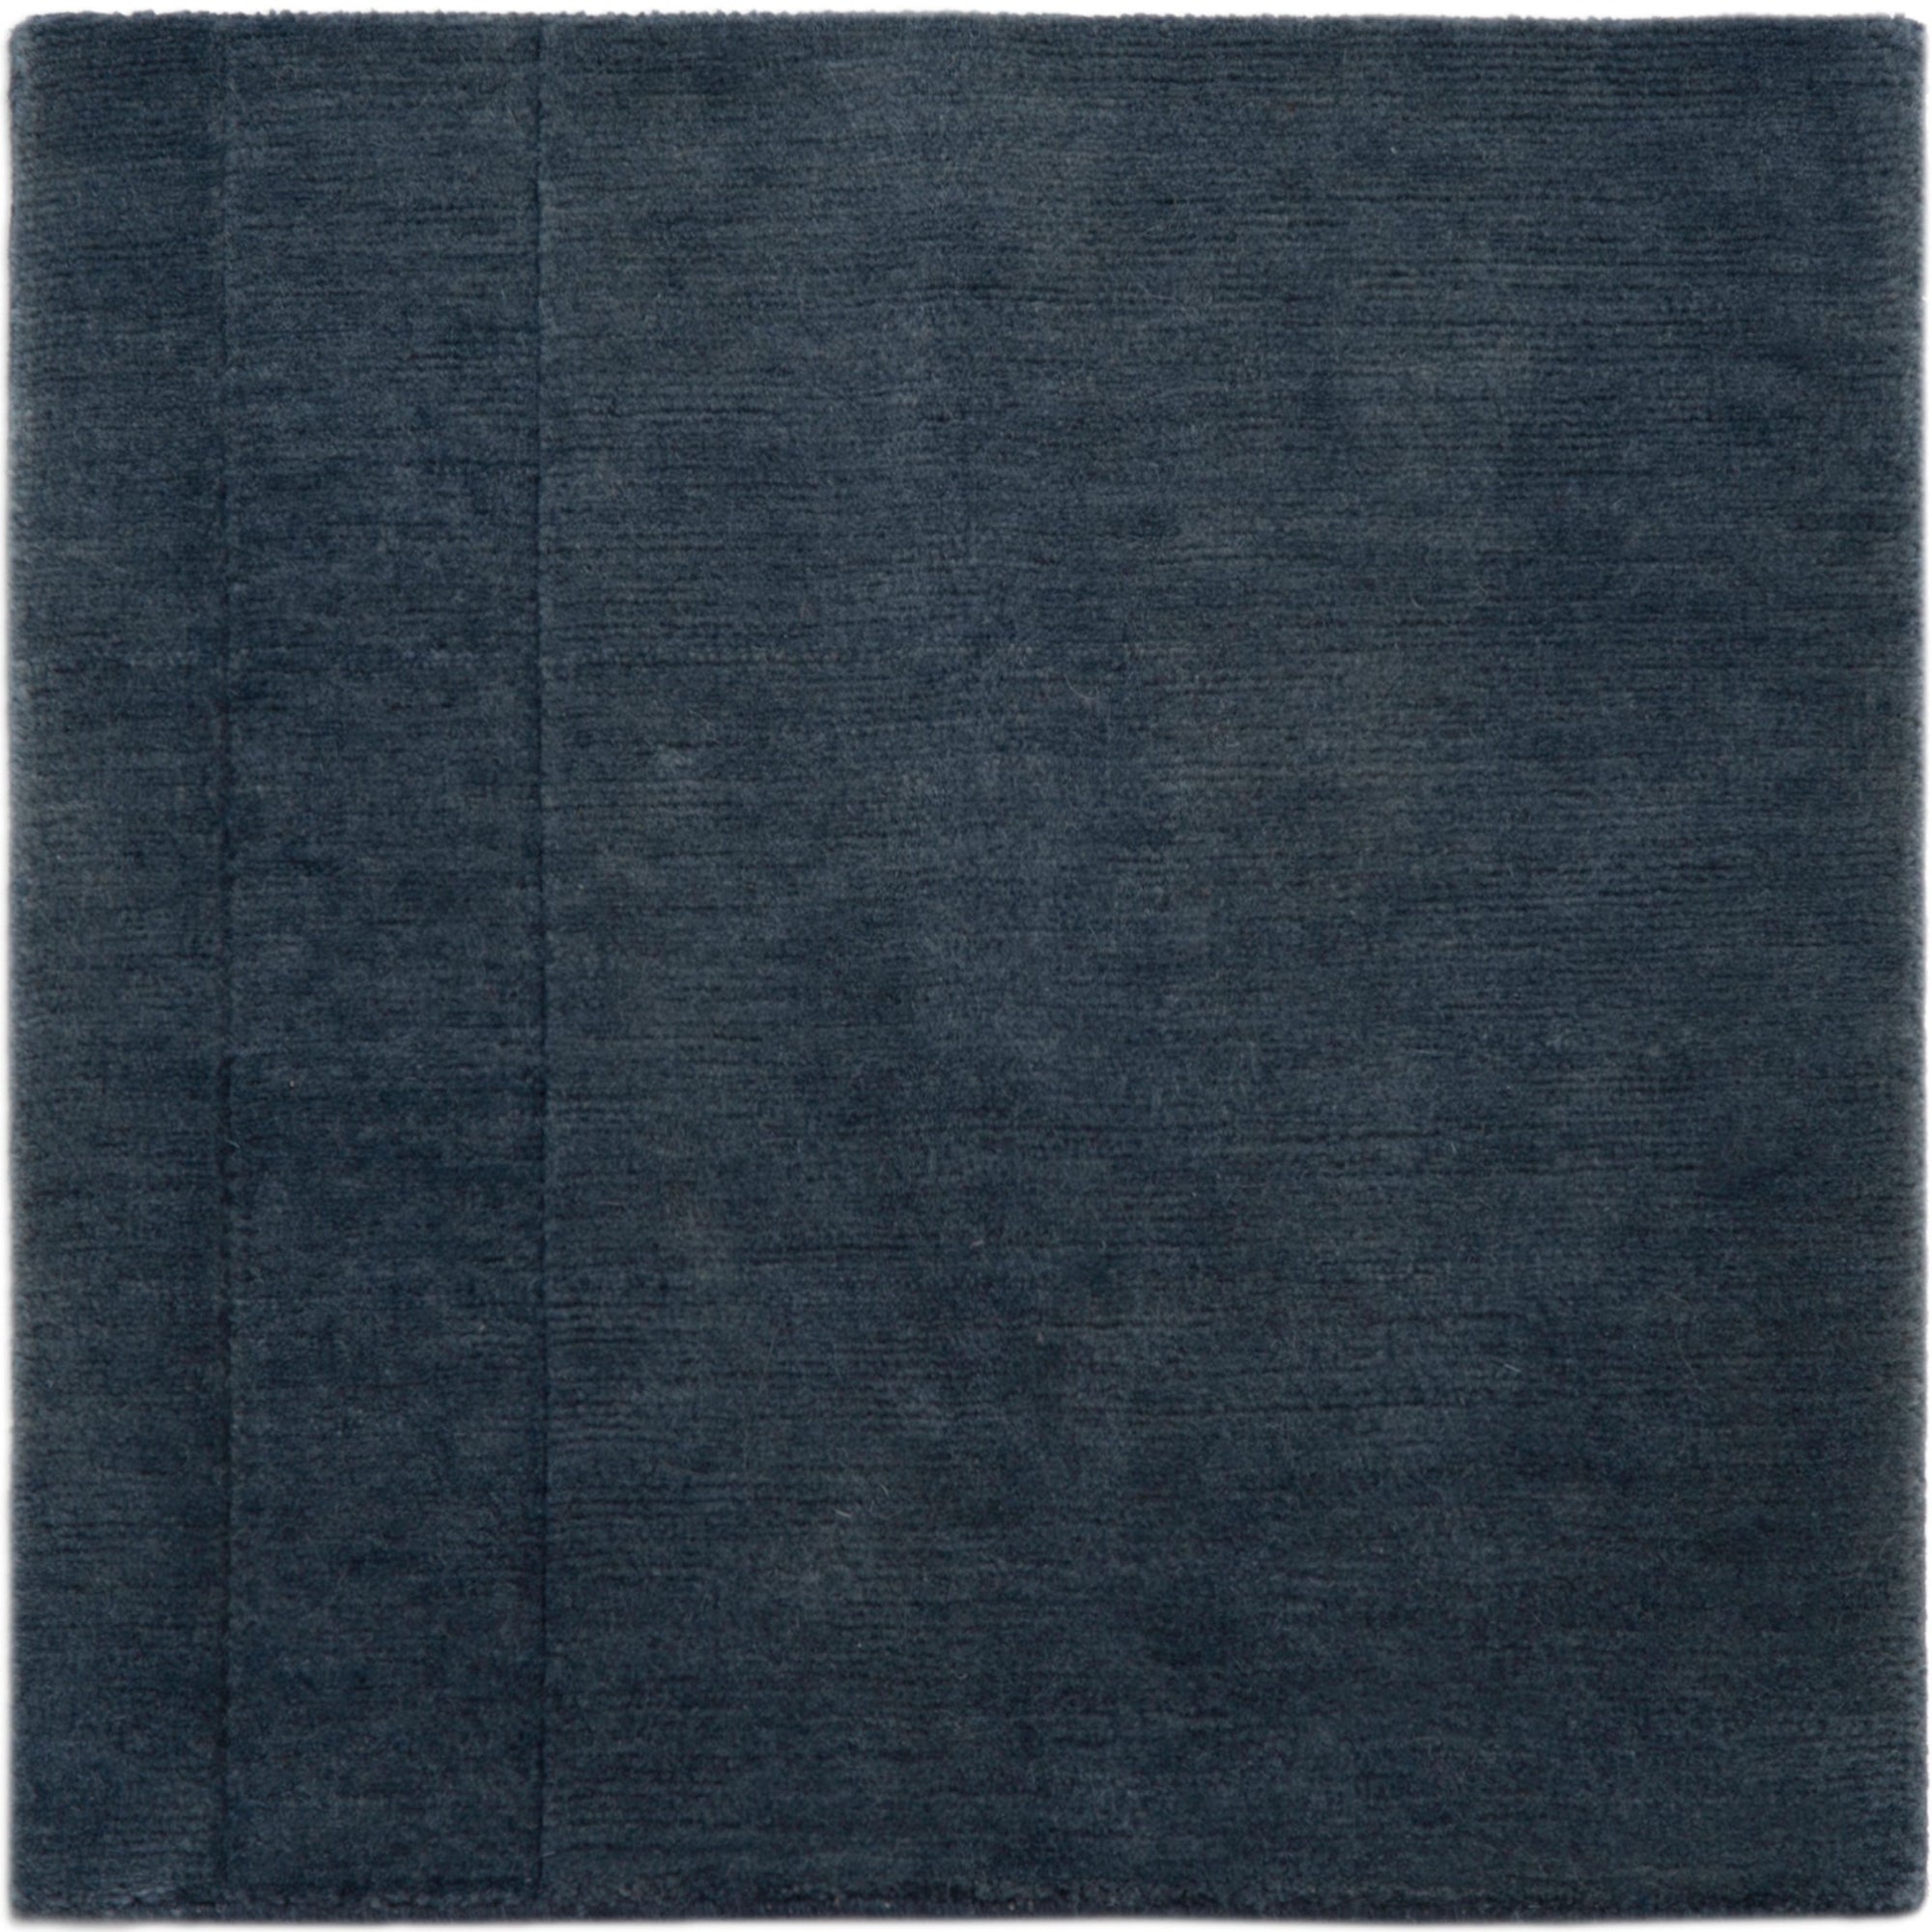 Wool Pique Fabric - Rosemary Hallgarten